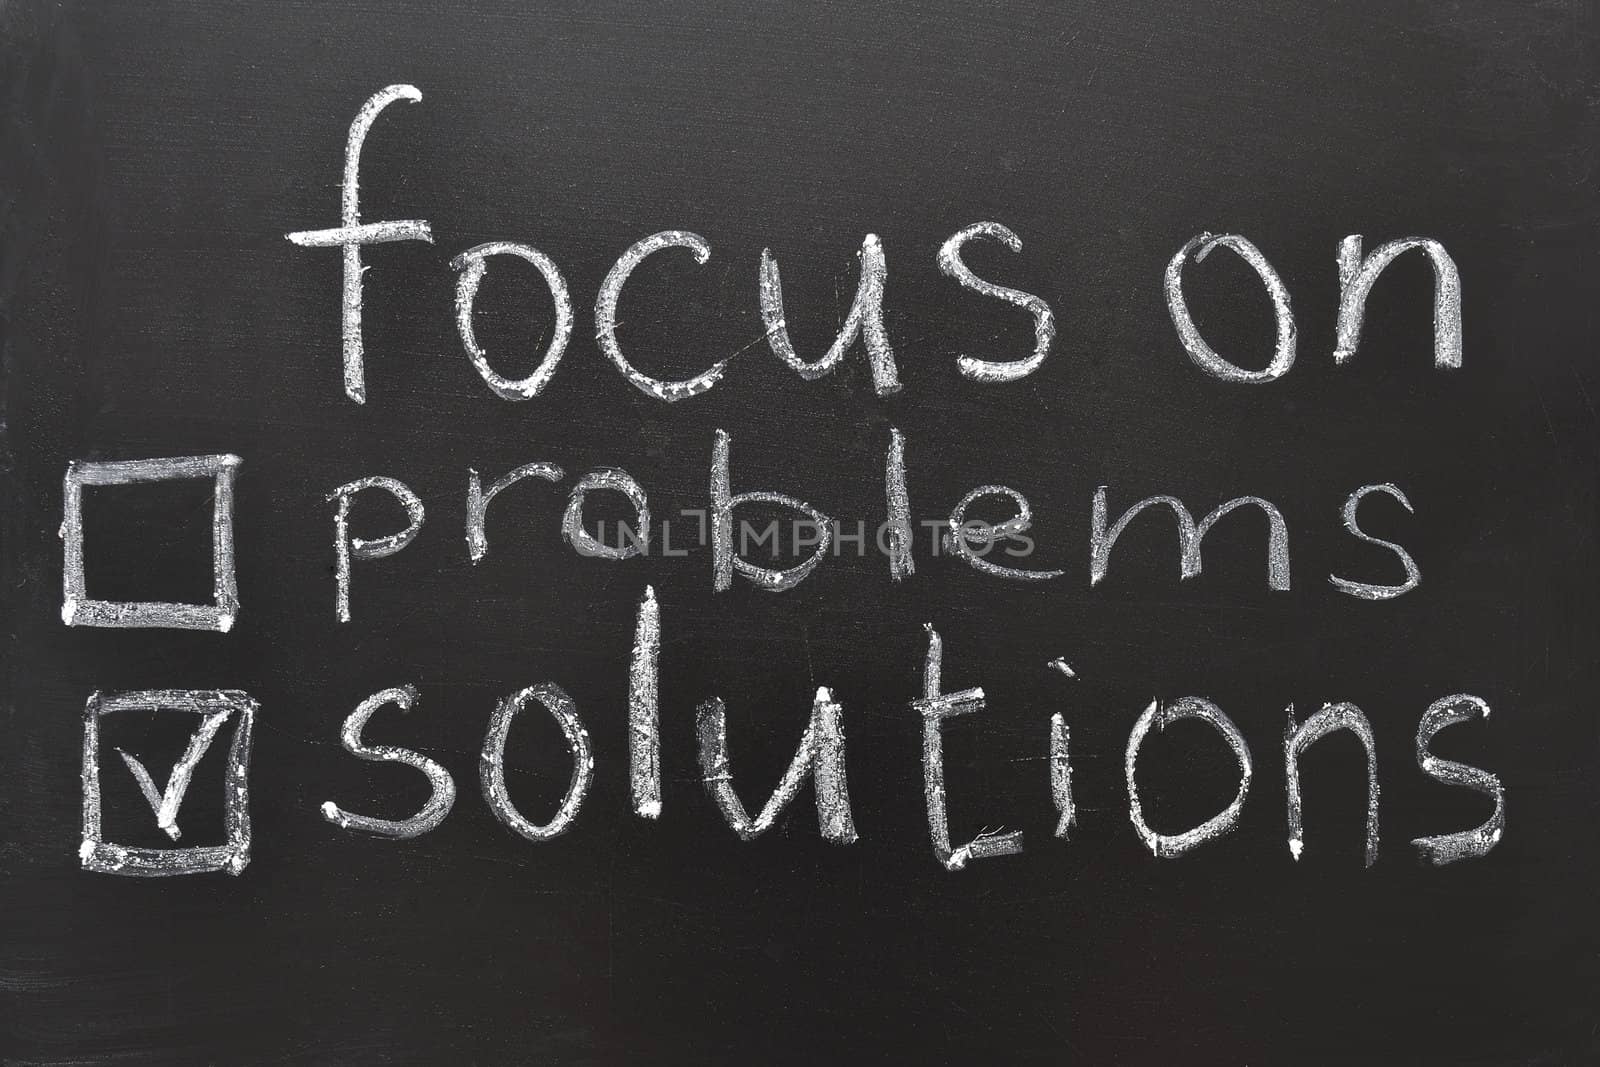 focus on solutions concept, handwritten on blackboard